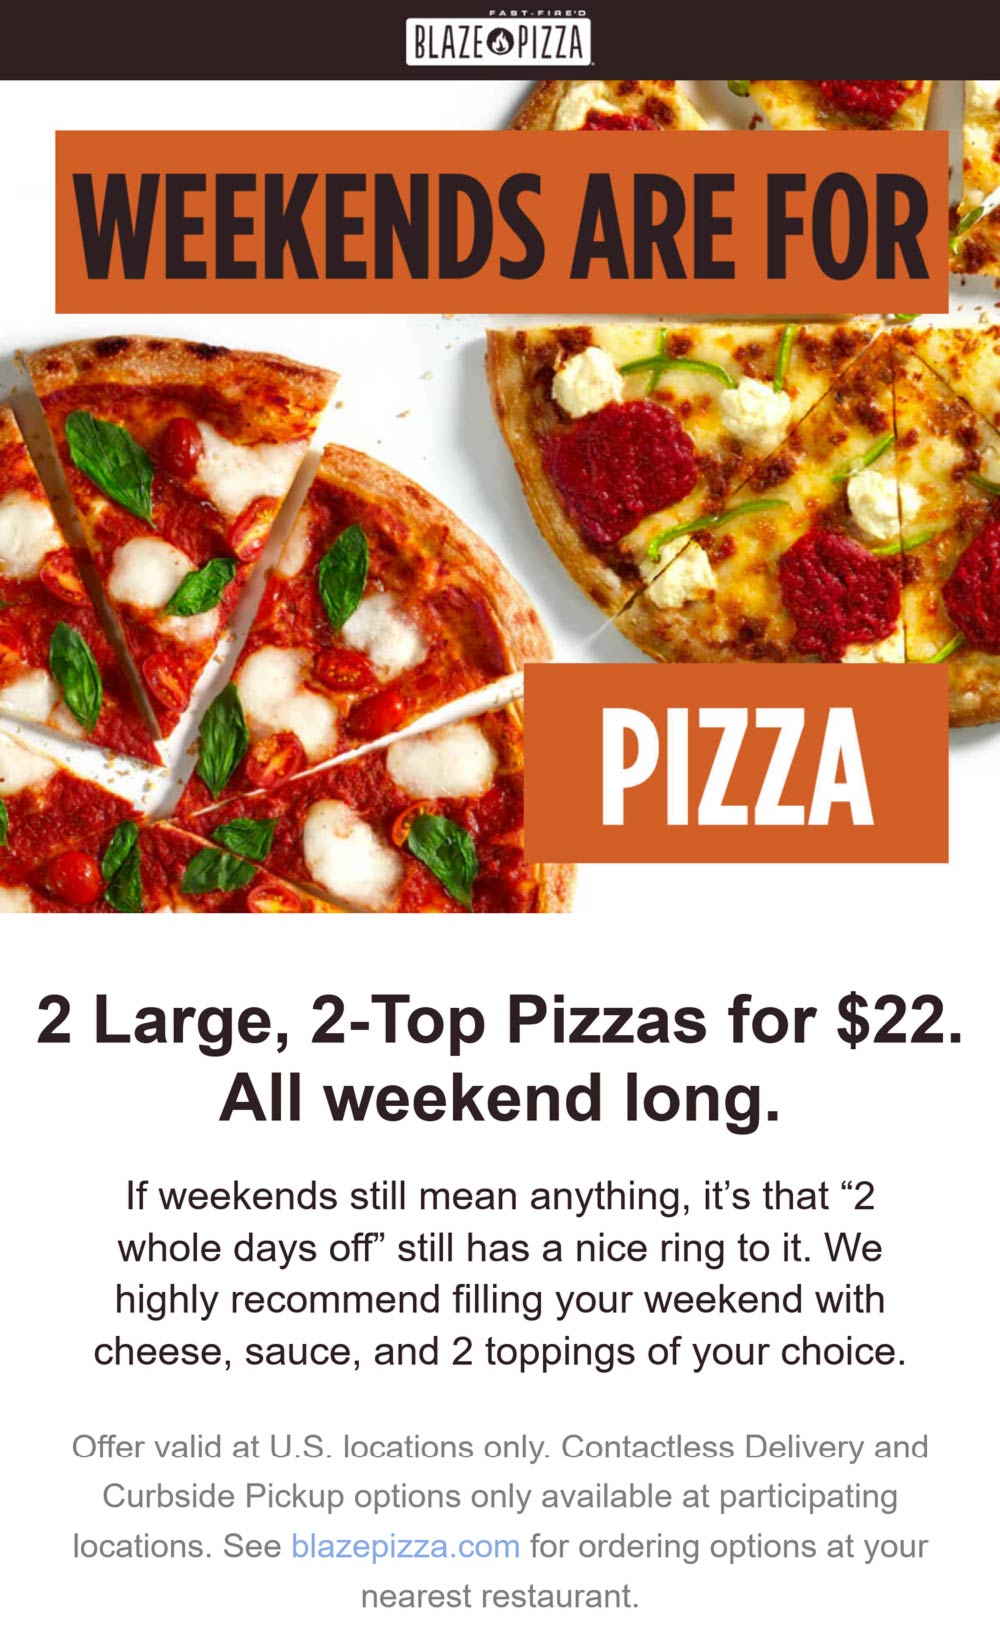 Blaze Pizza restaurants Coupon  2 large 2 topping pizzas = $22 at Blaze Pizza #blazepizza 